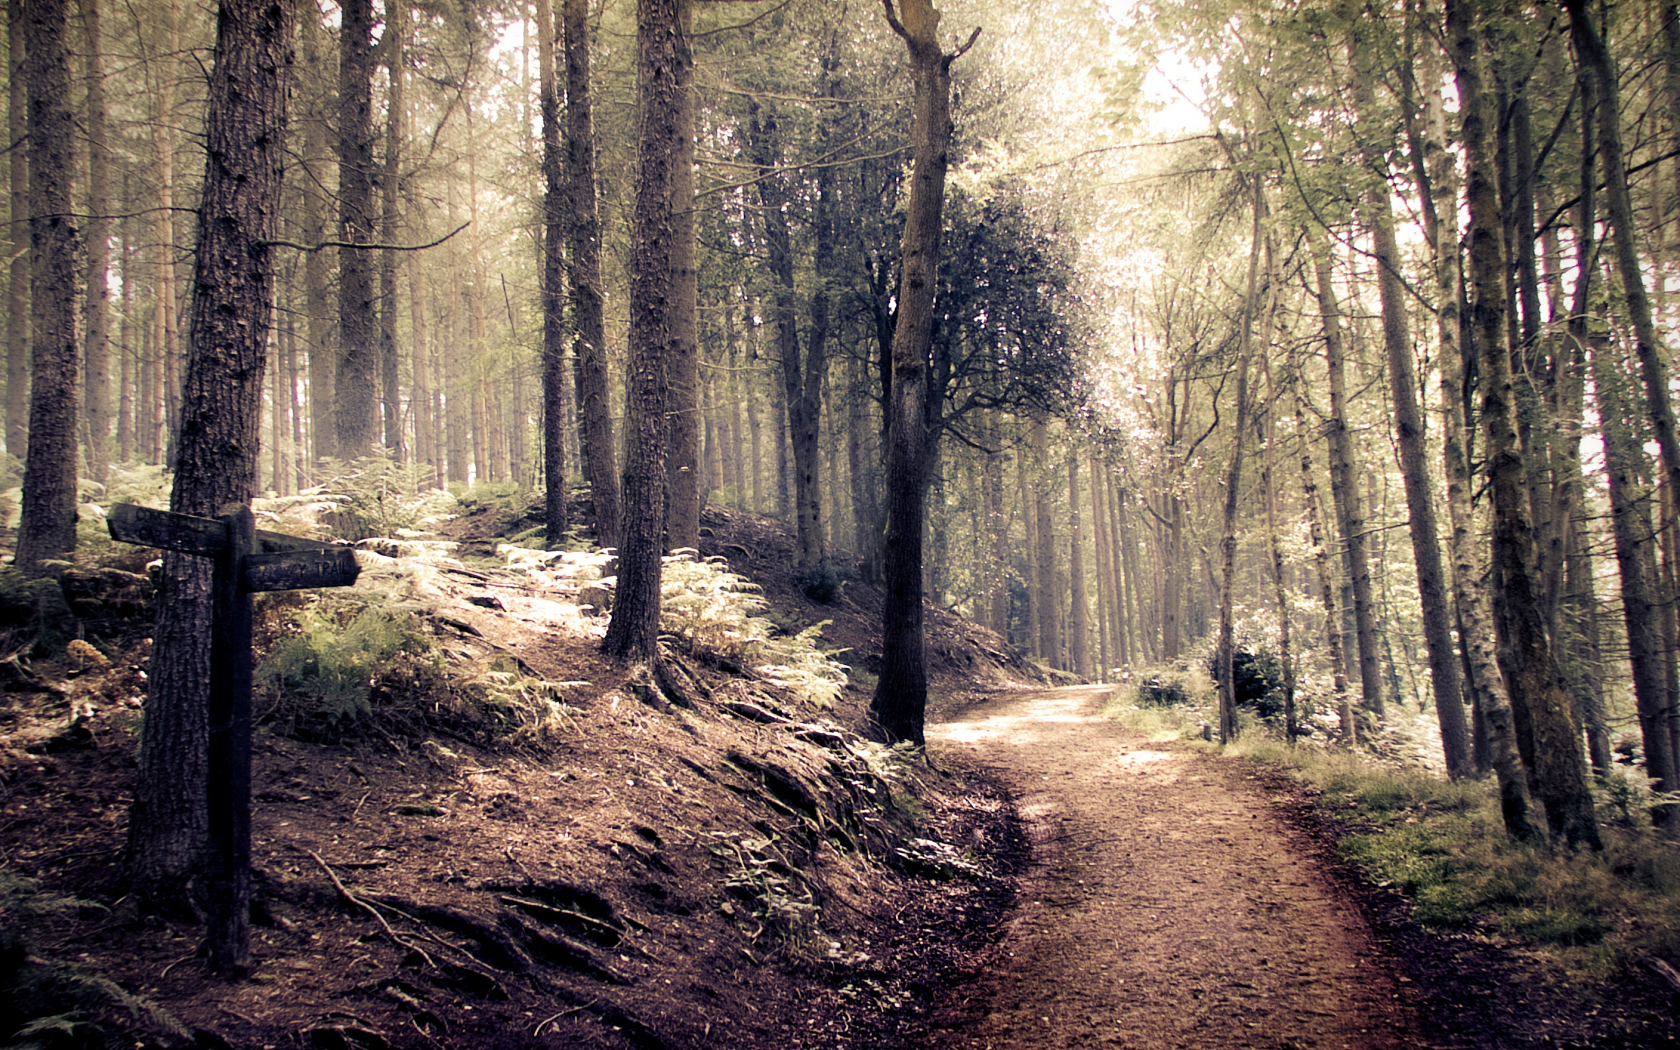 указатель, path, indie, дорога, style, forest, лес